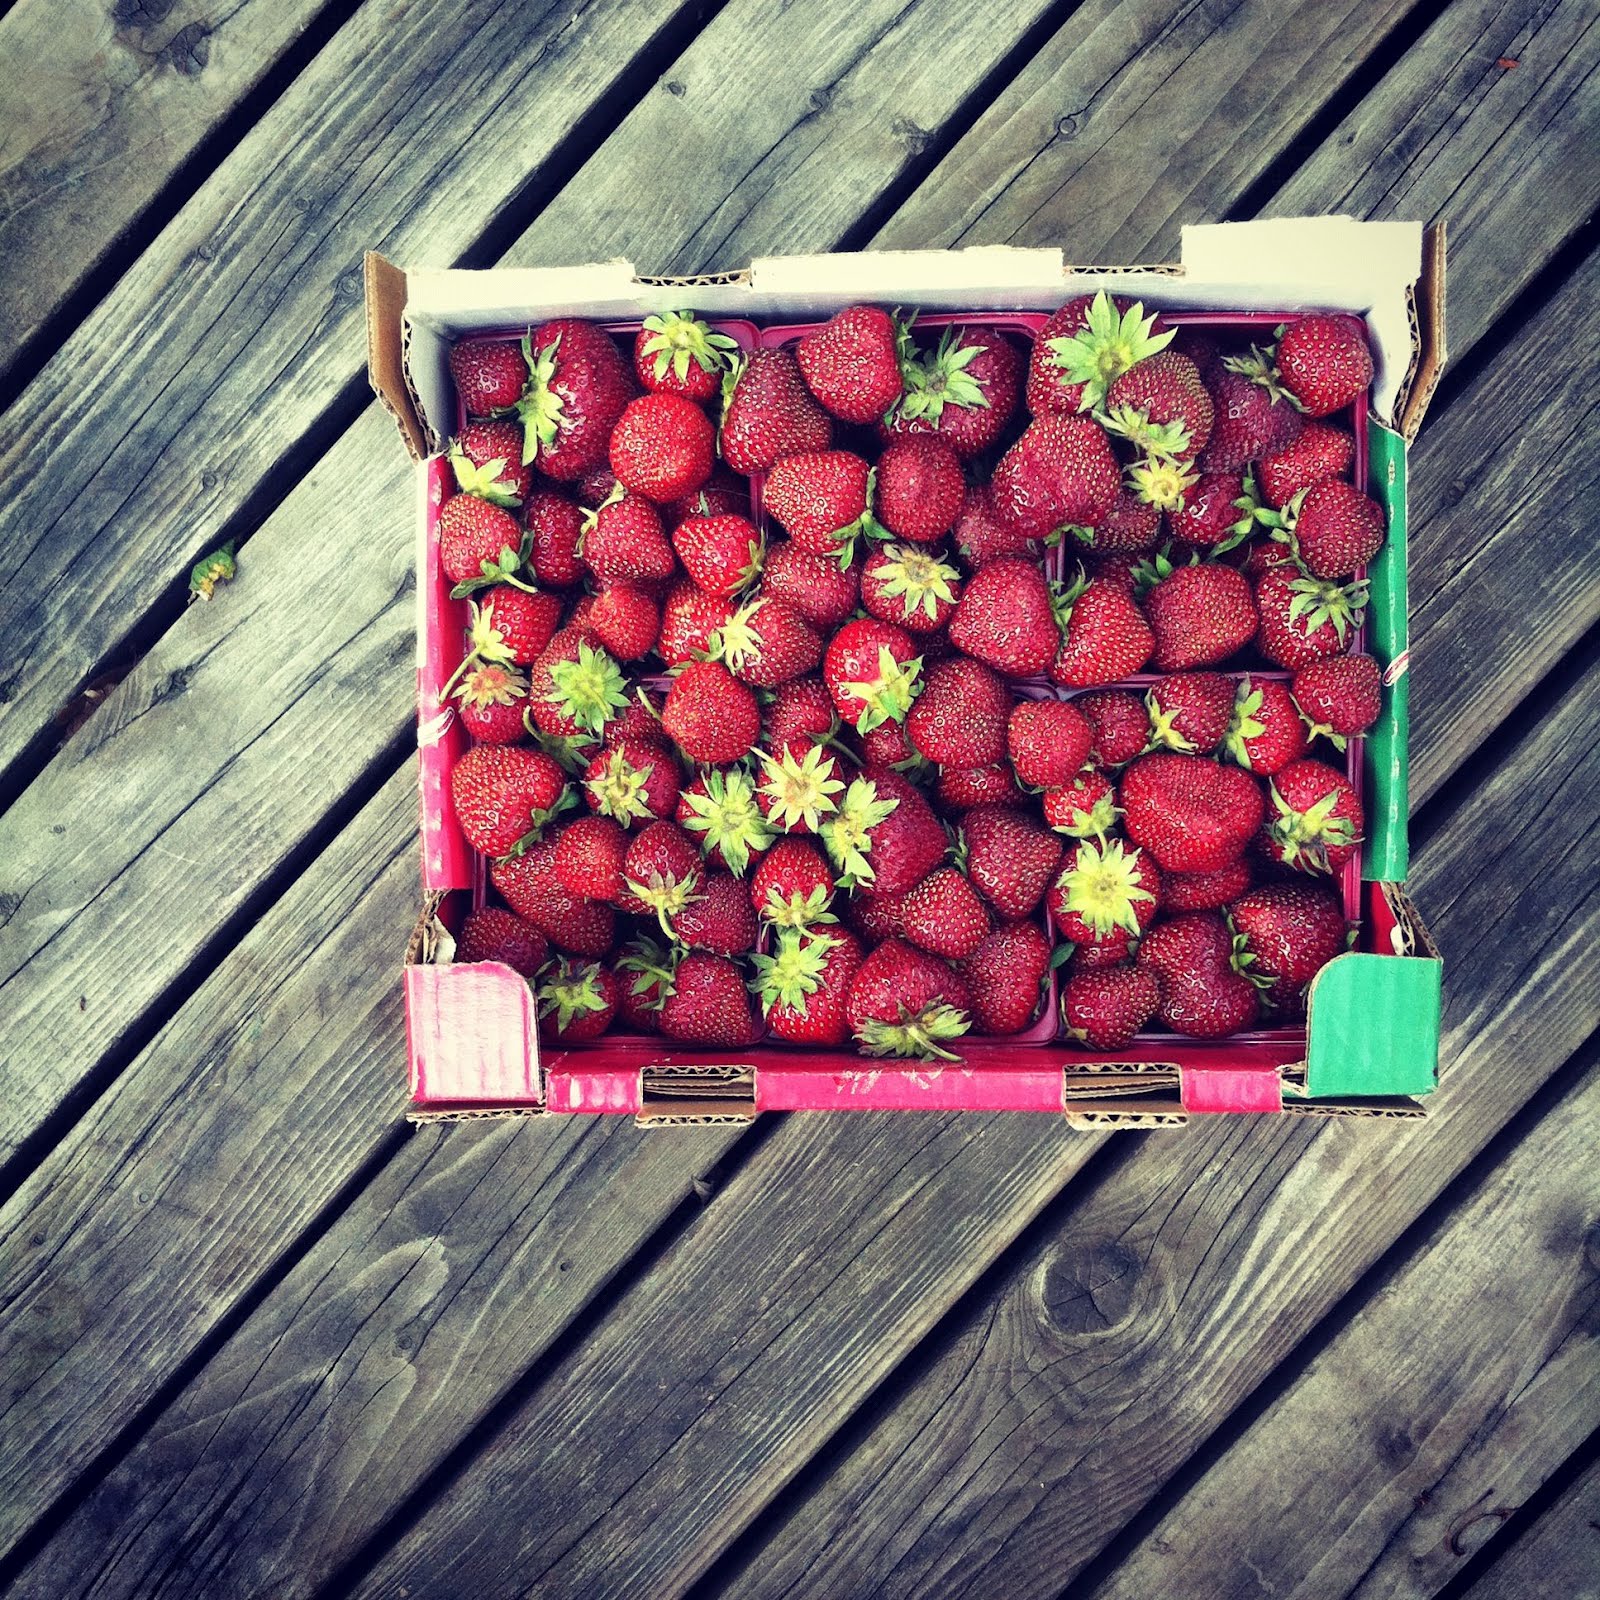 Strawberry Season Recap